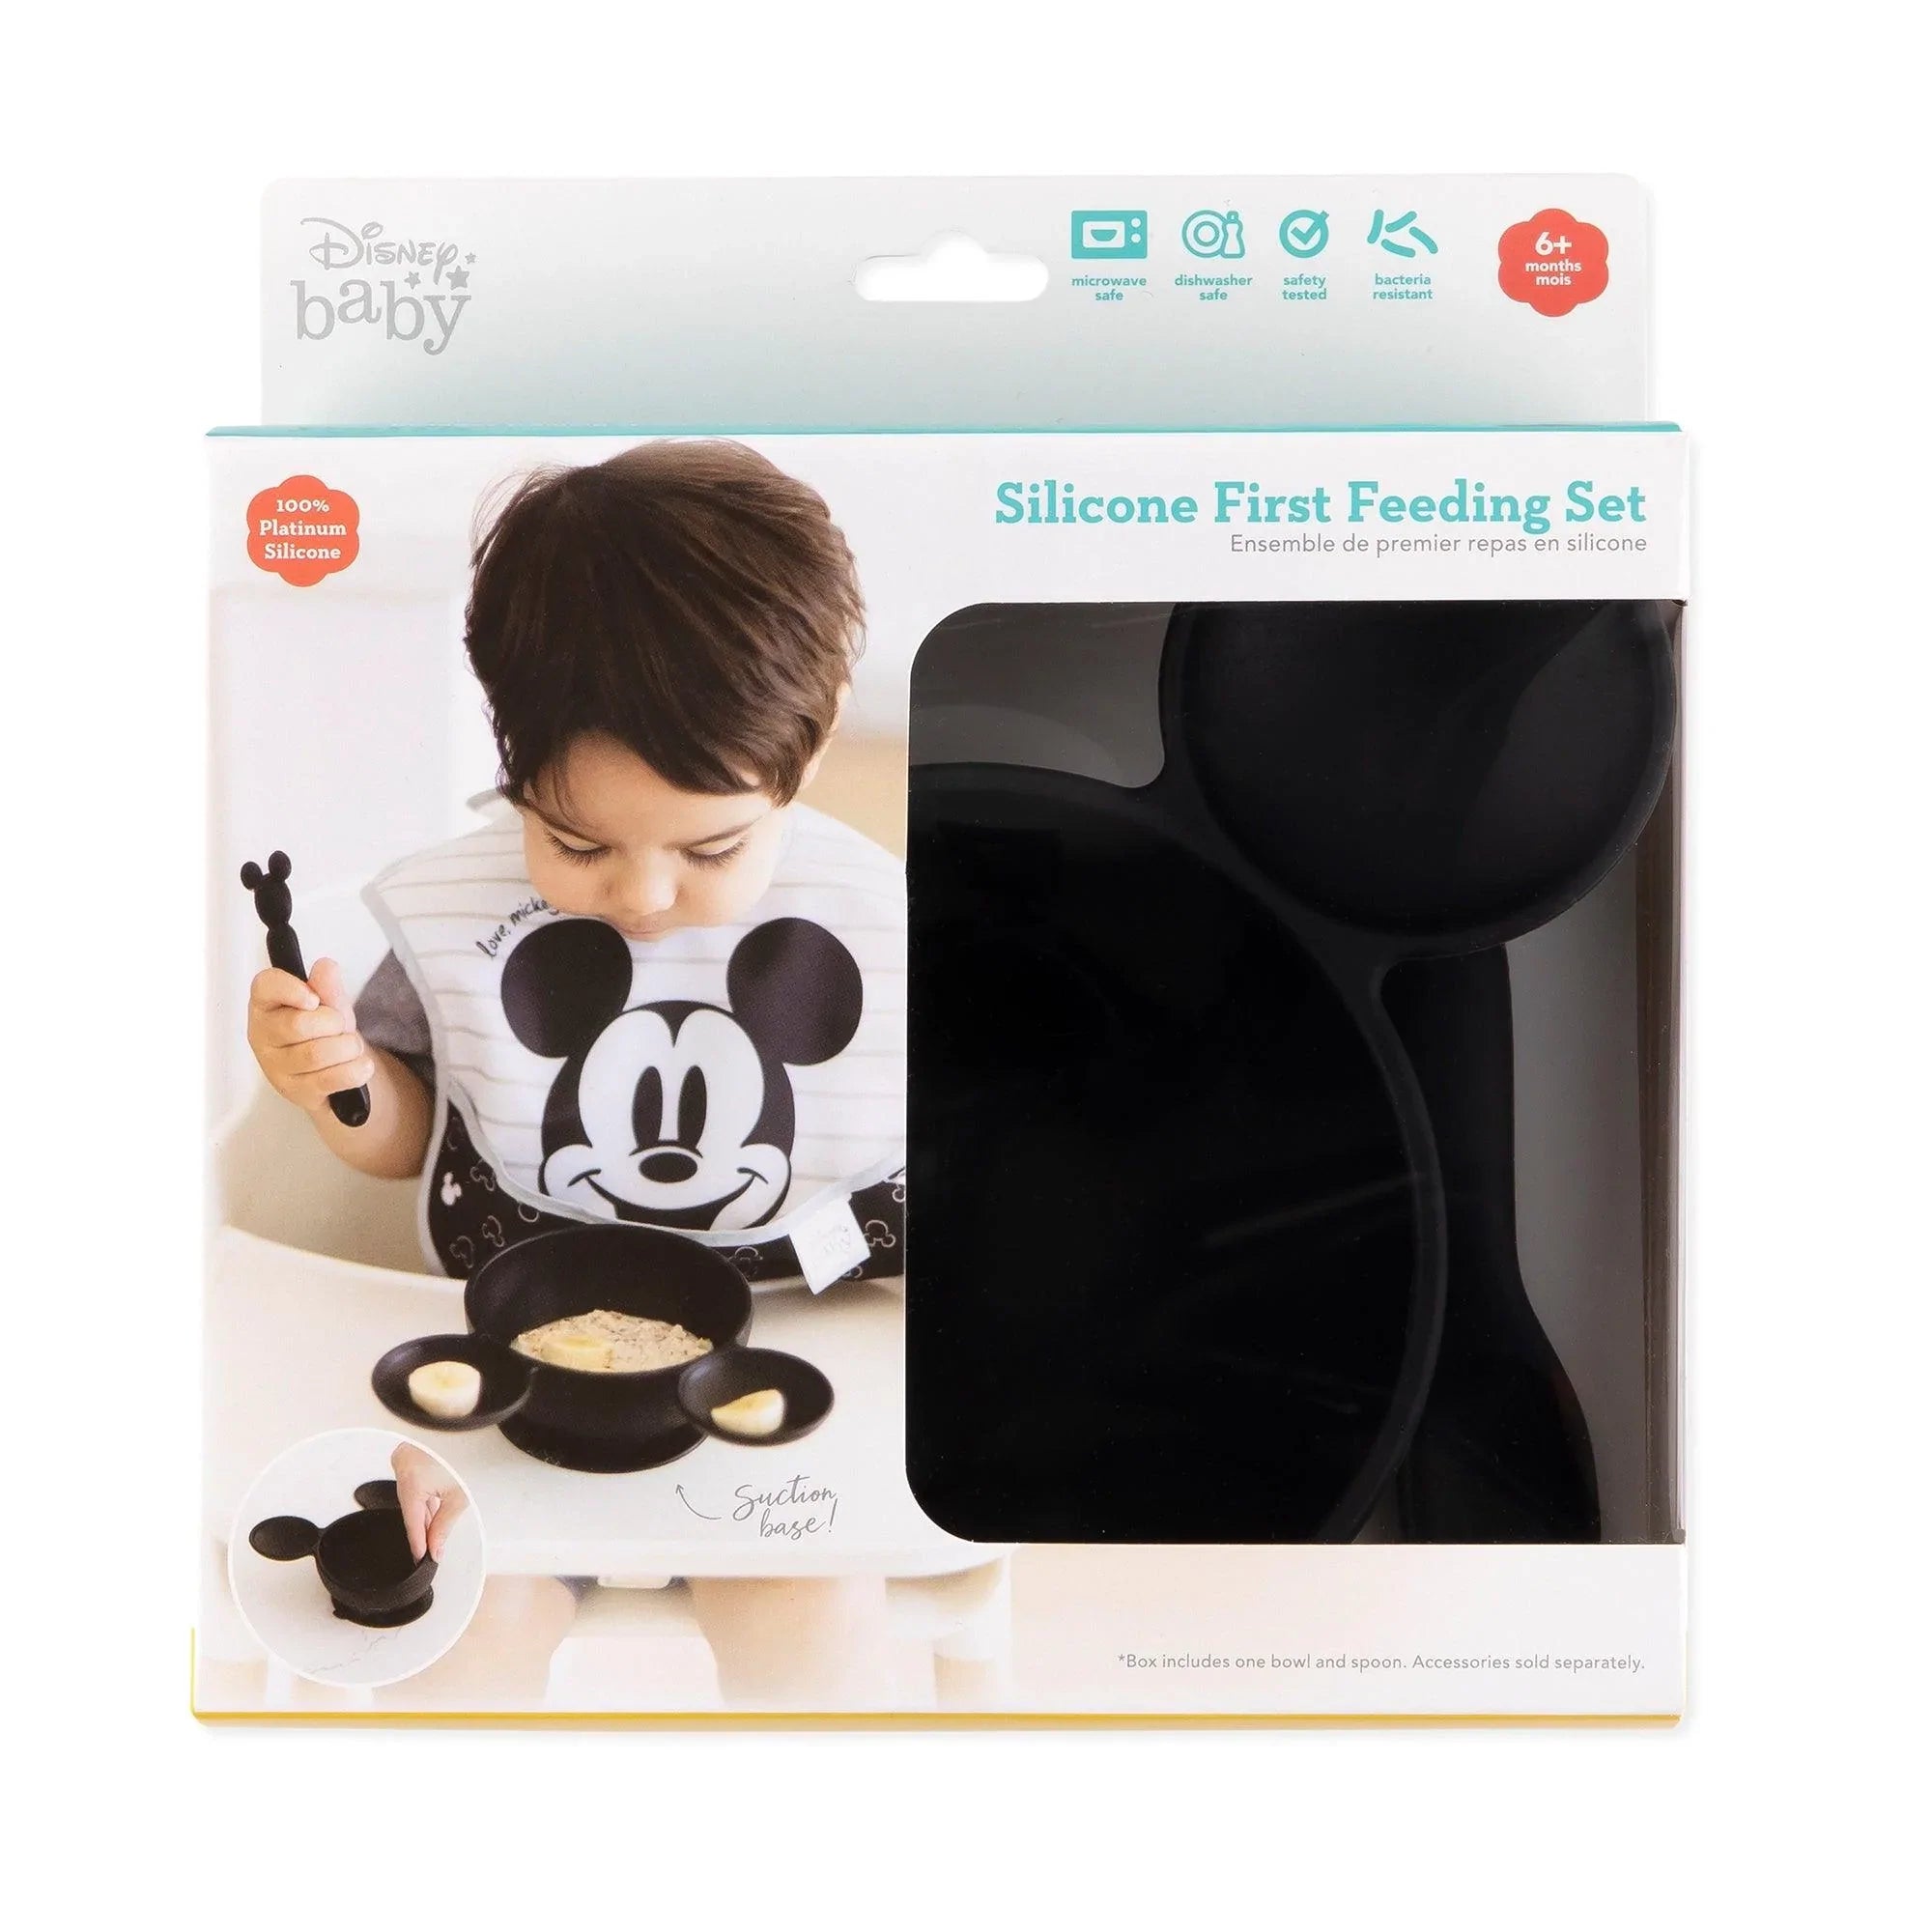 Disney White & Black Mickey Mouse Ear-Shaped Handle Ceramic Mug